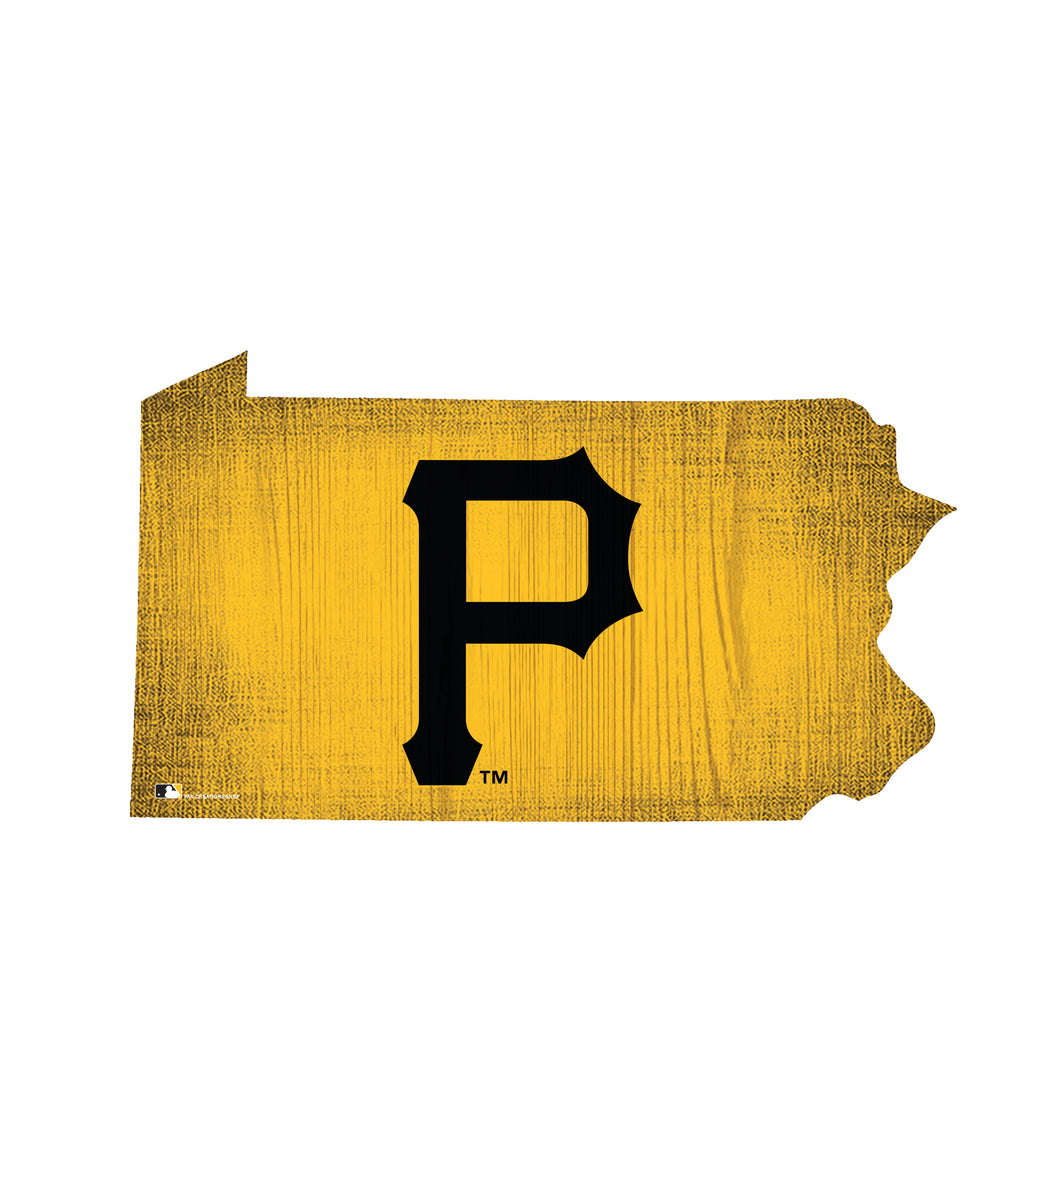 MLB Pirates Font 